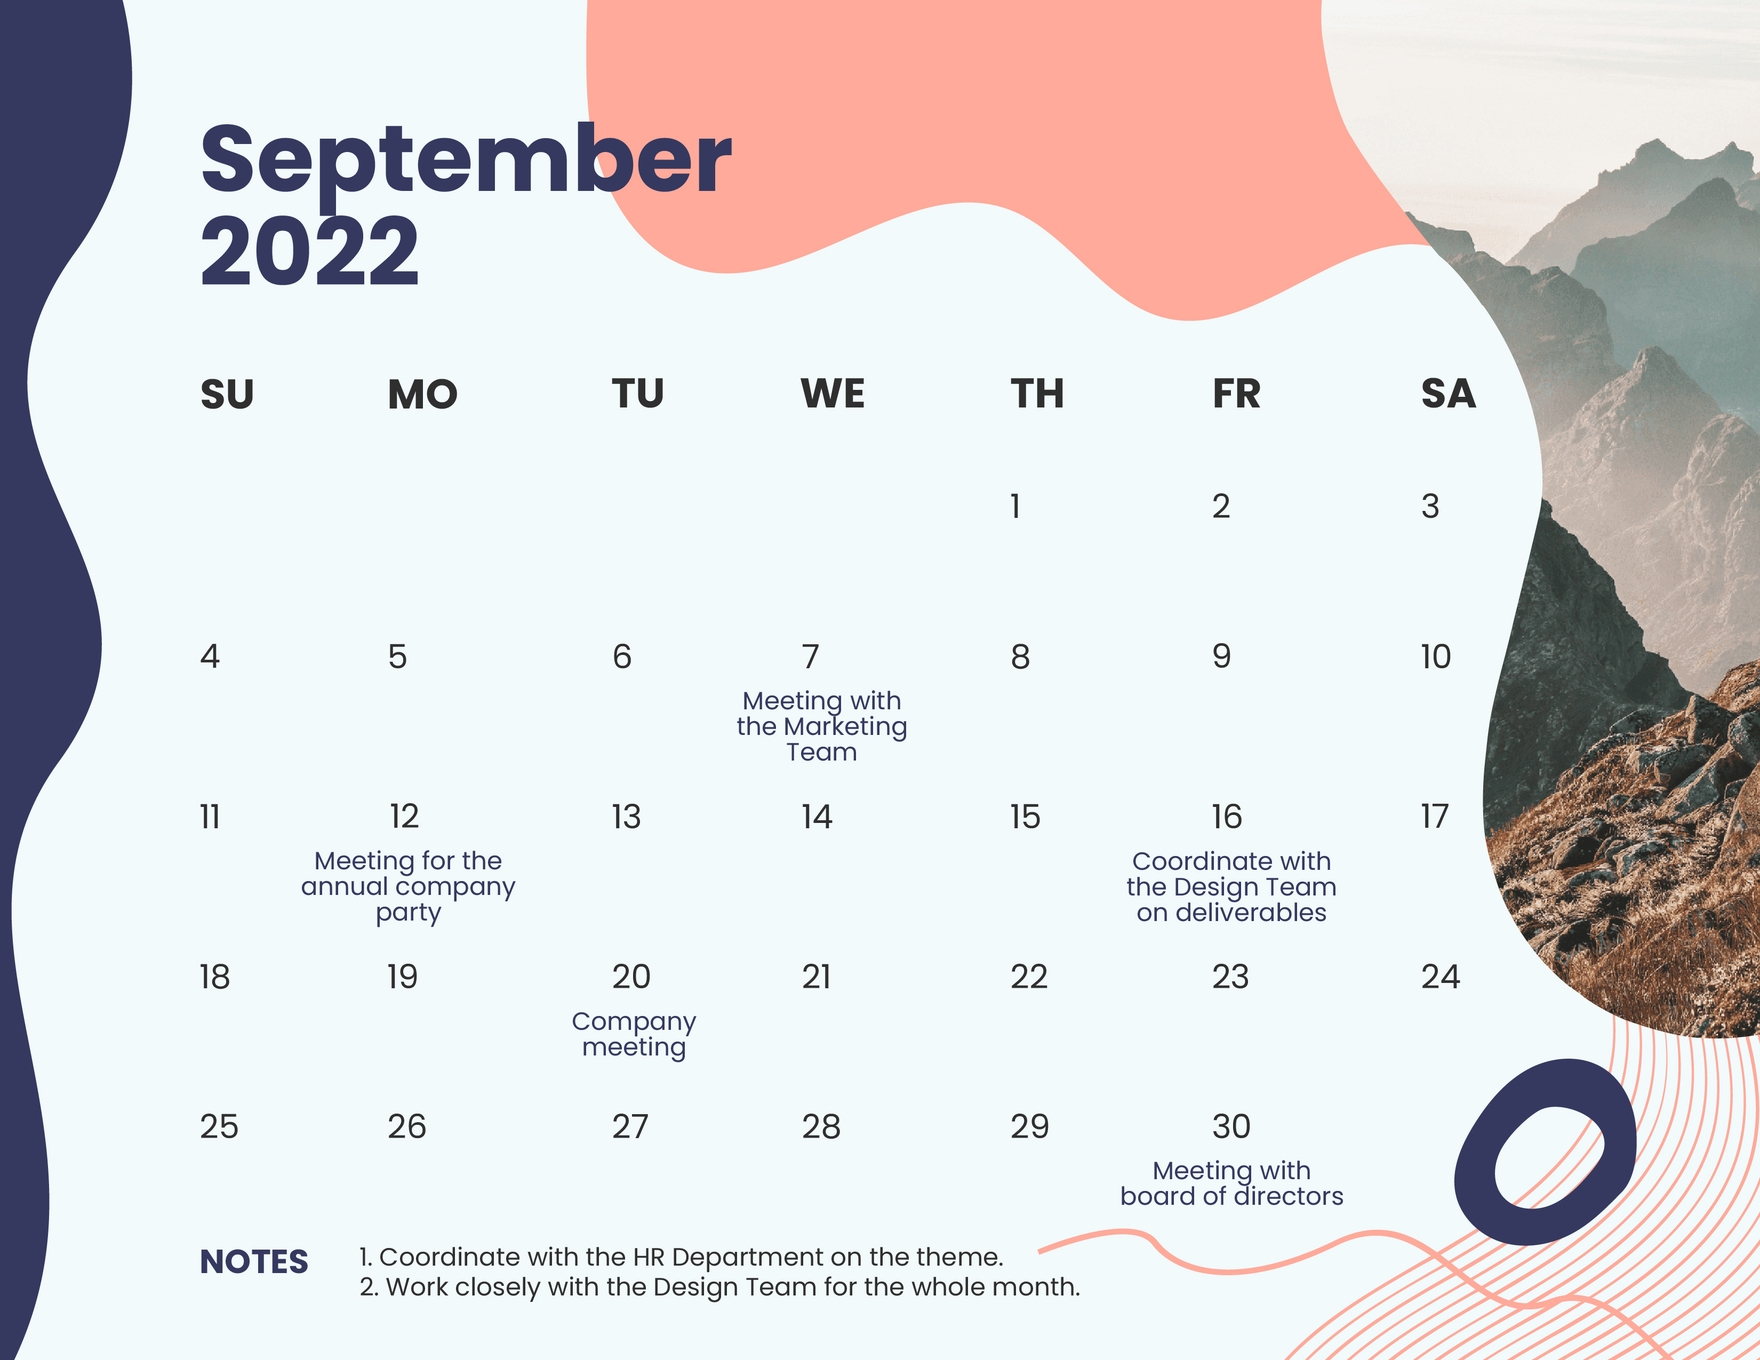 September 2022 Photo Calendar Template in Word, Illustrator, PSD